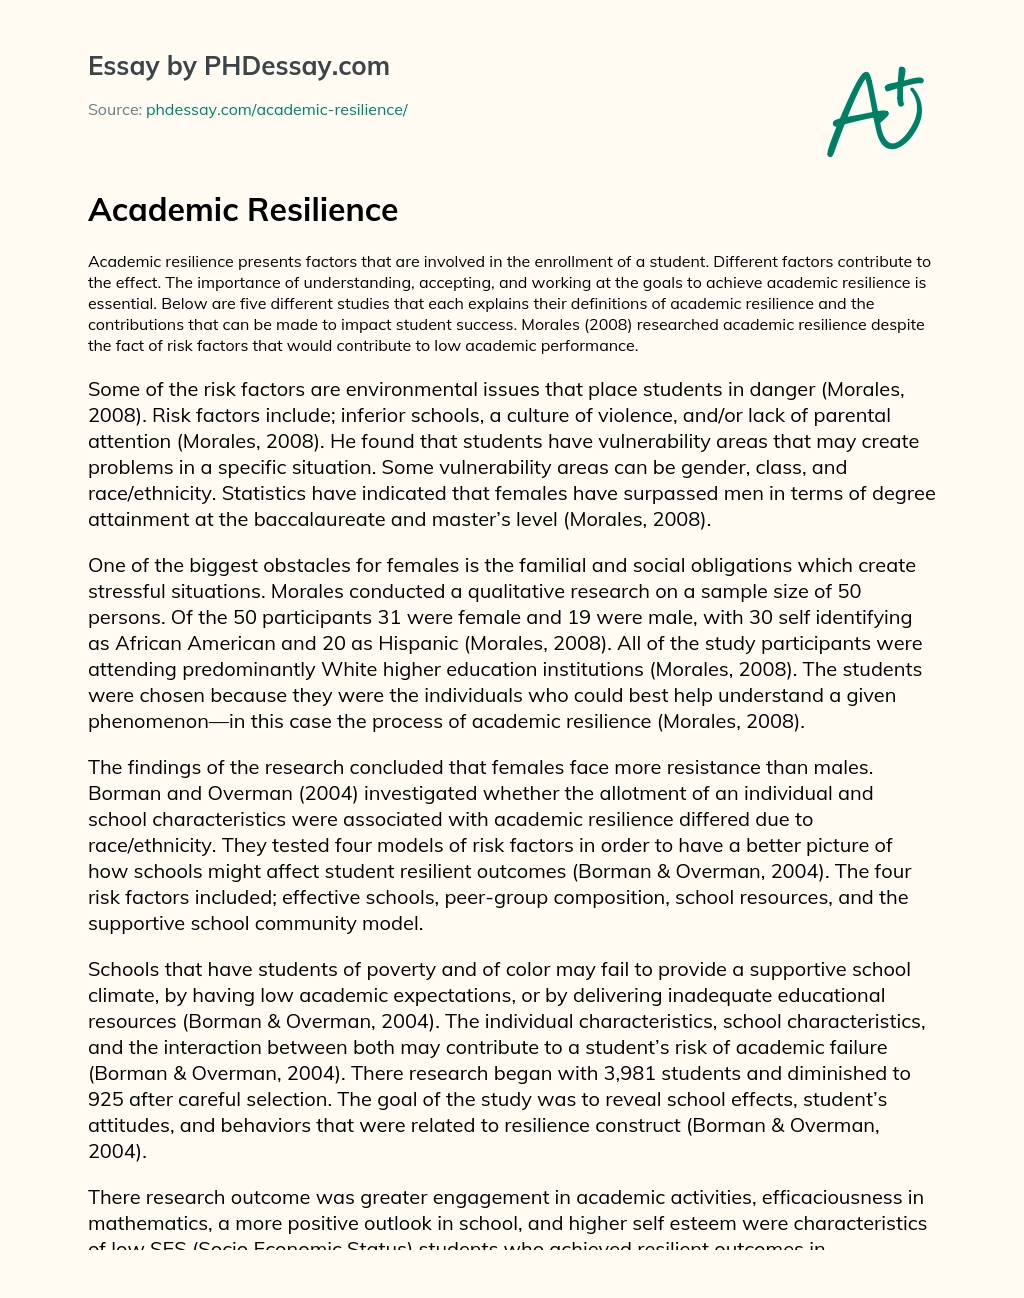 Academic Resilience essay